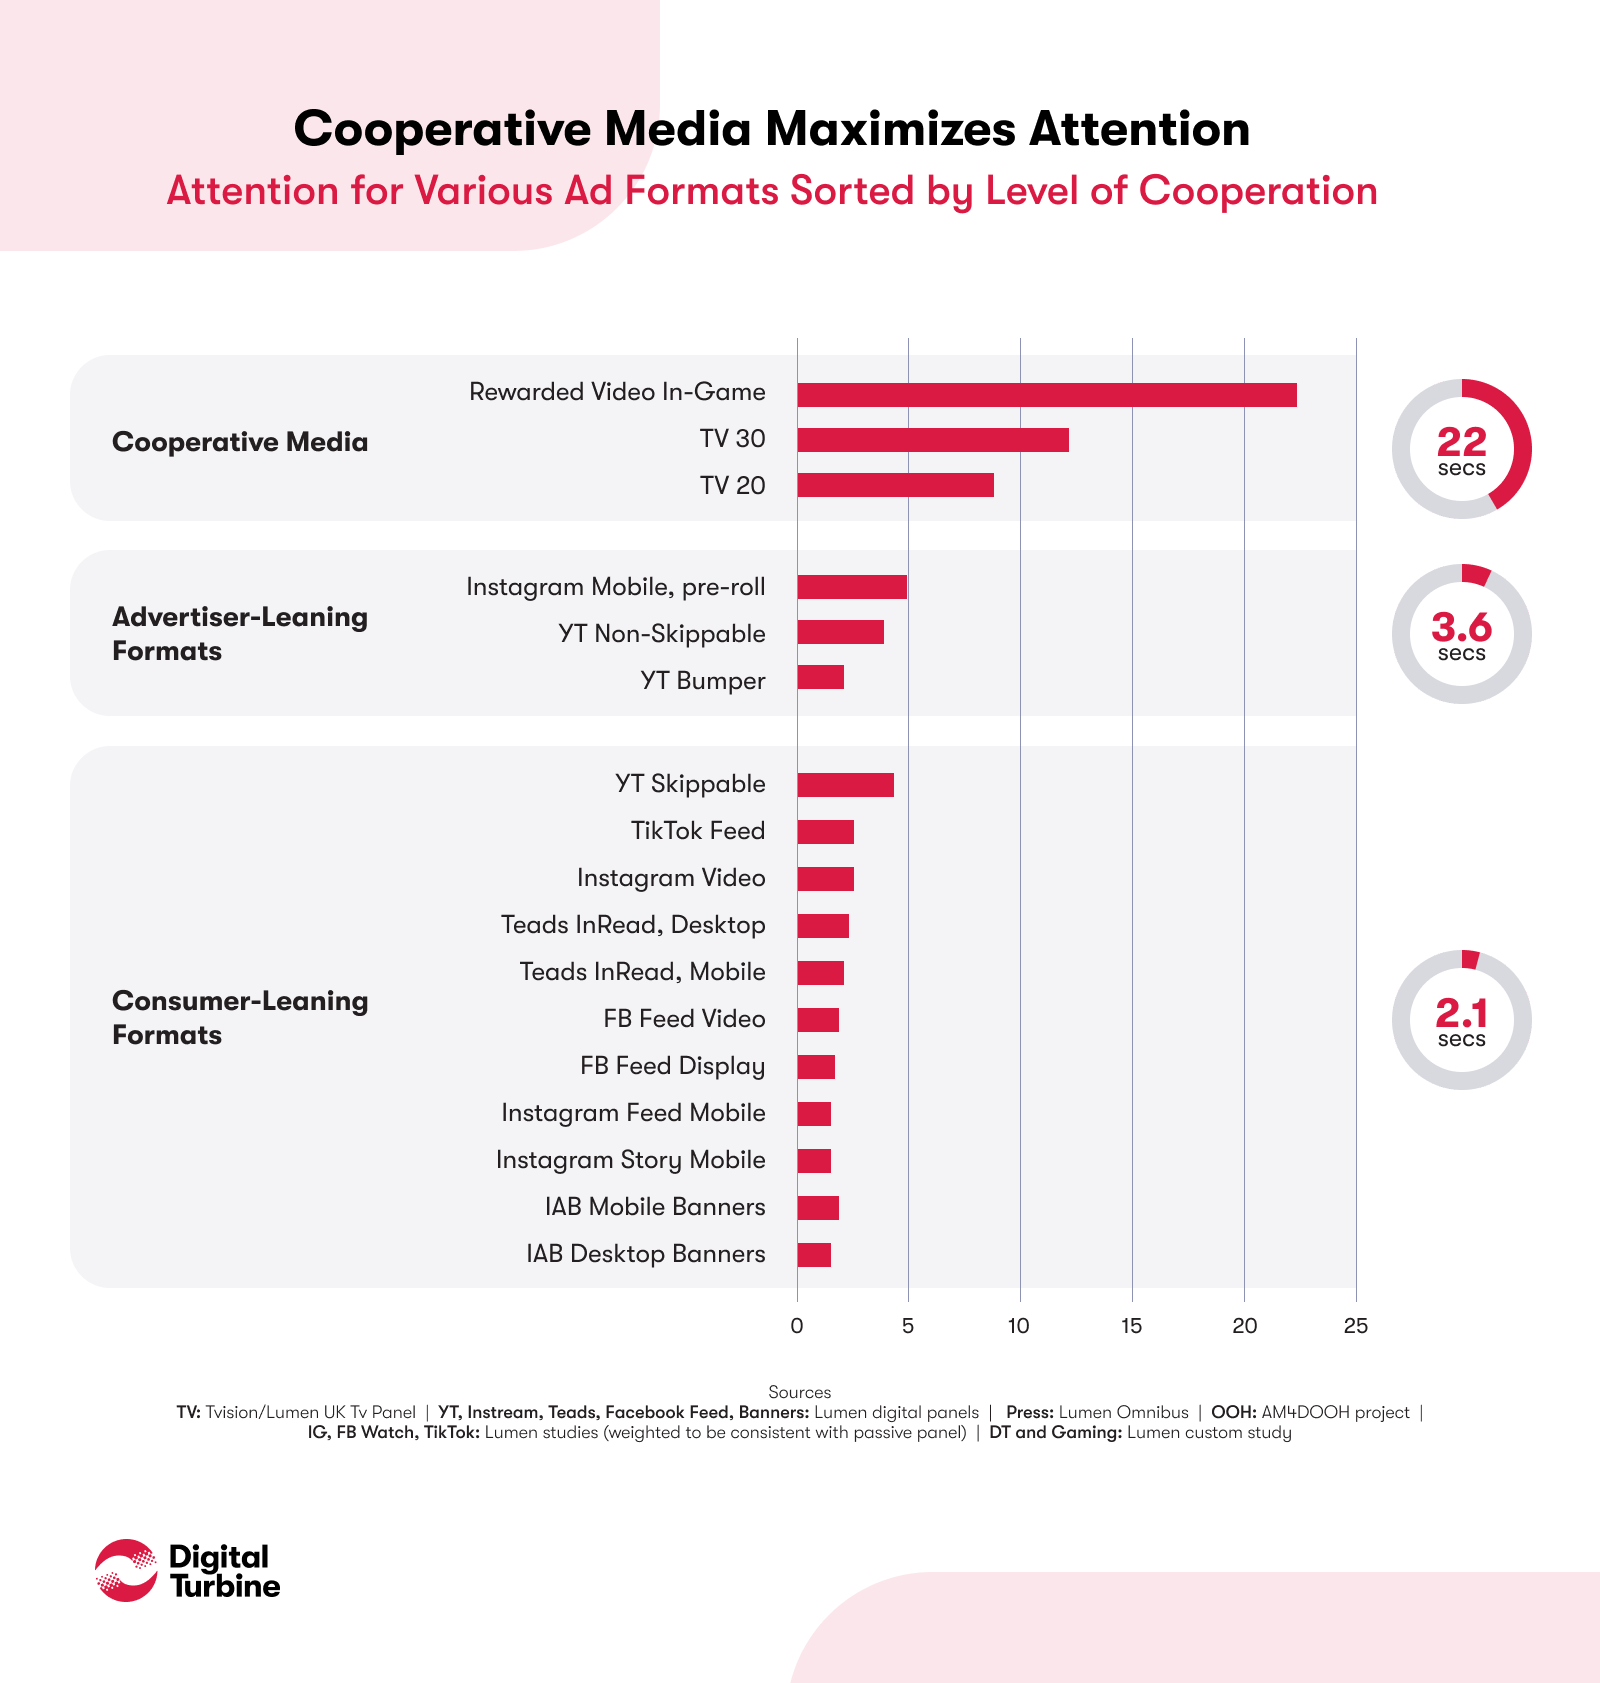 Cooperative media maximizes attention